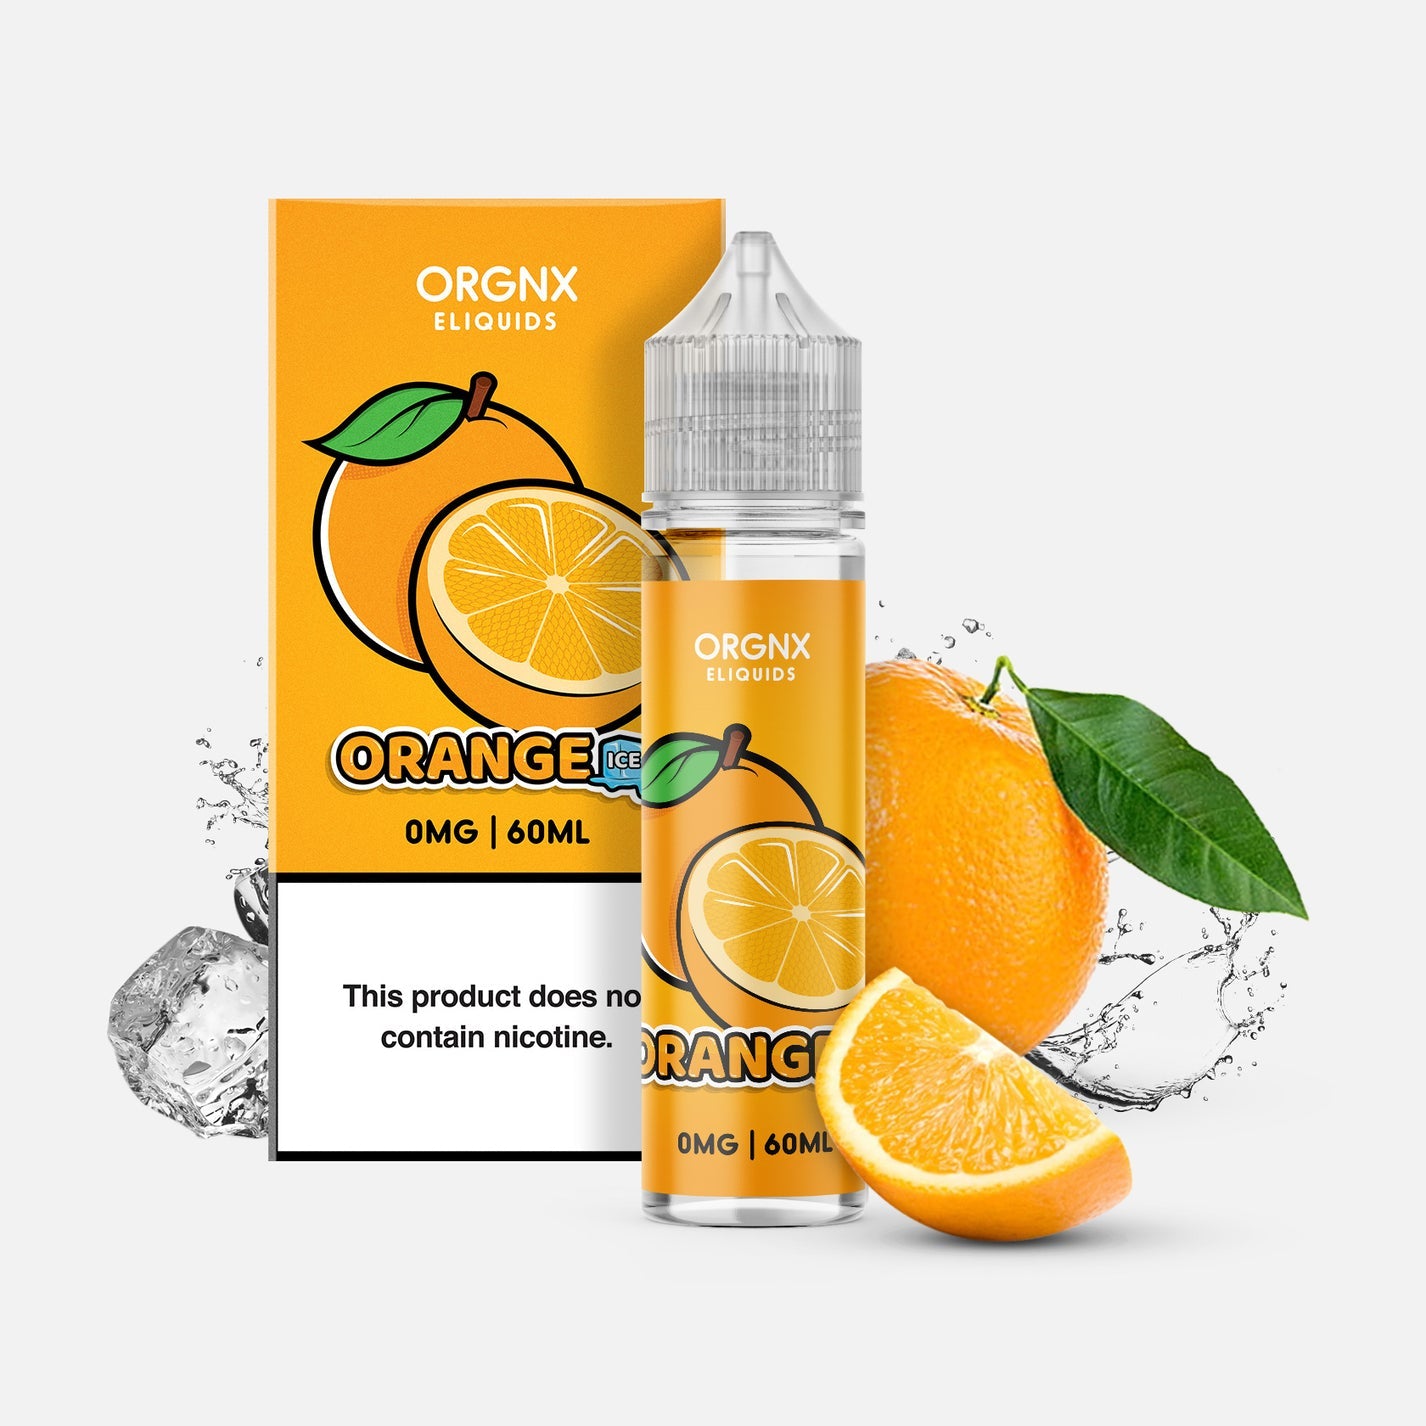 Orgnx - Orange Ice